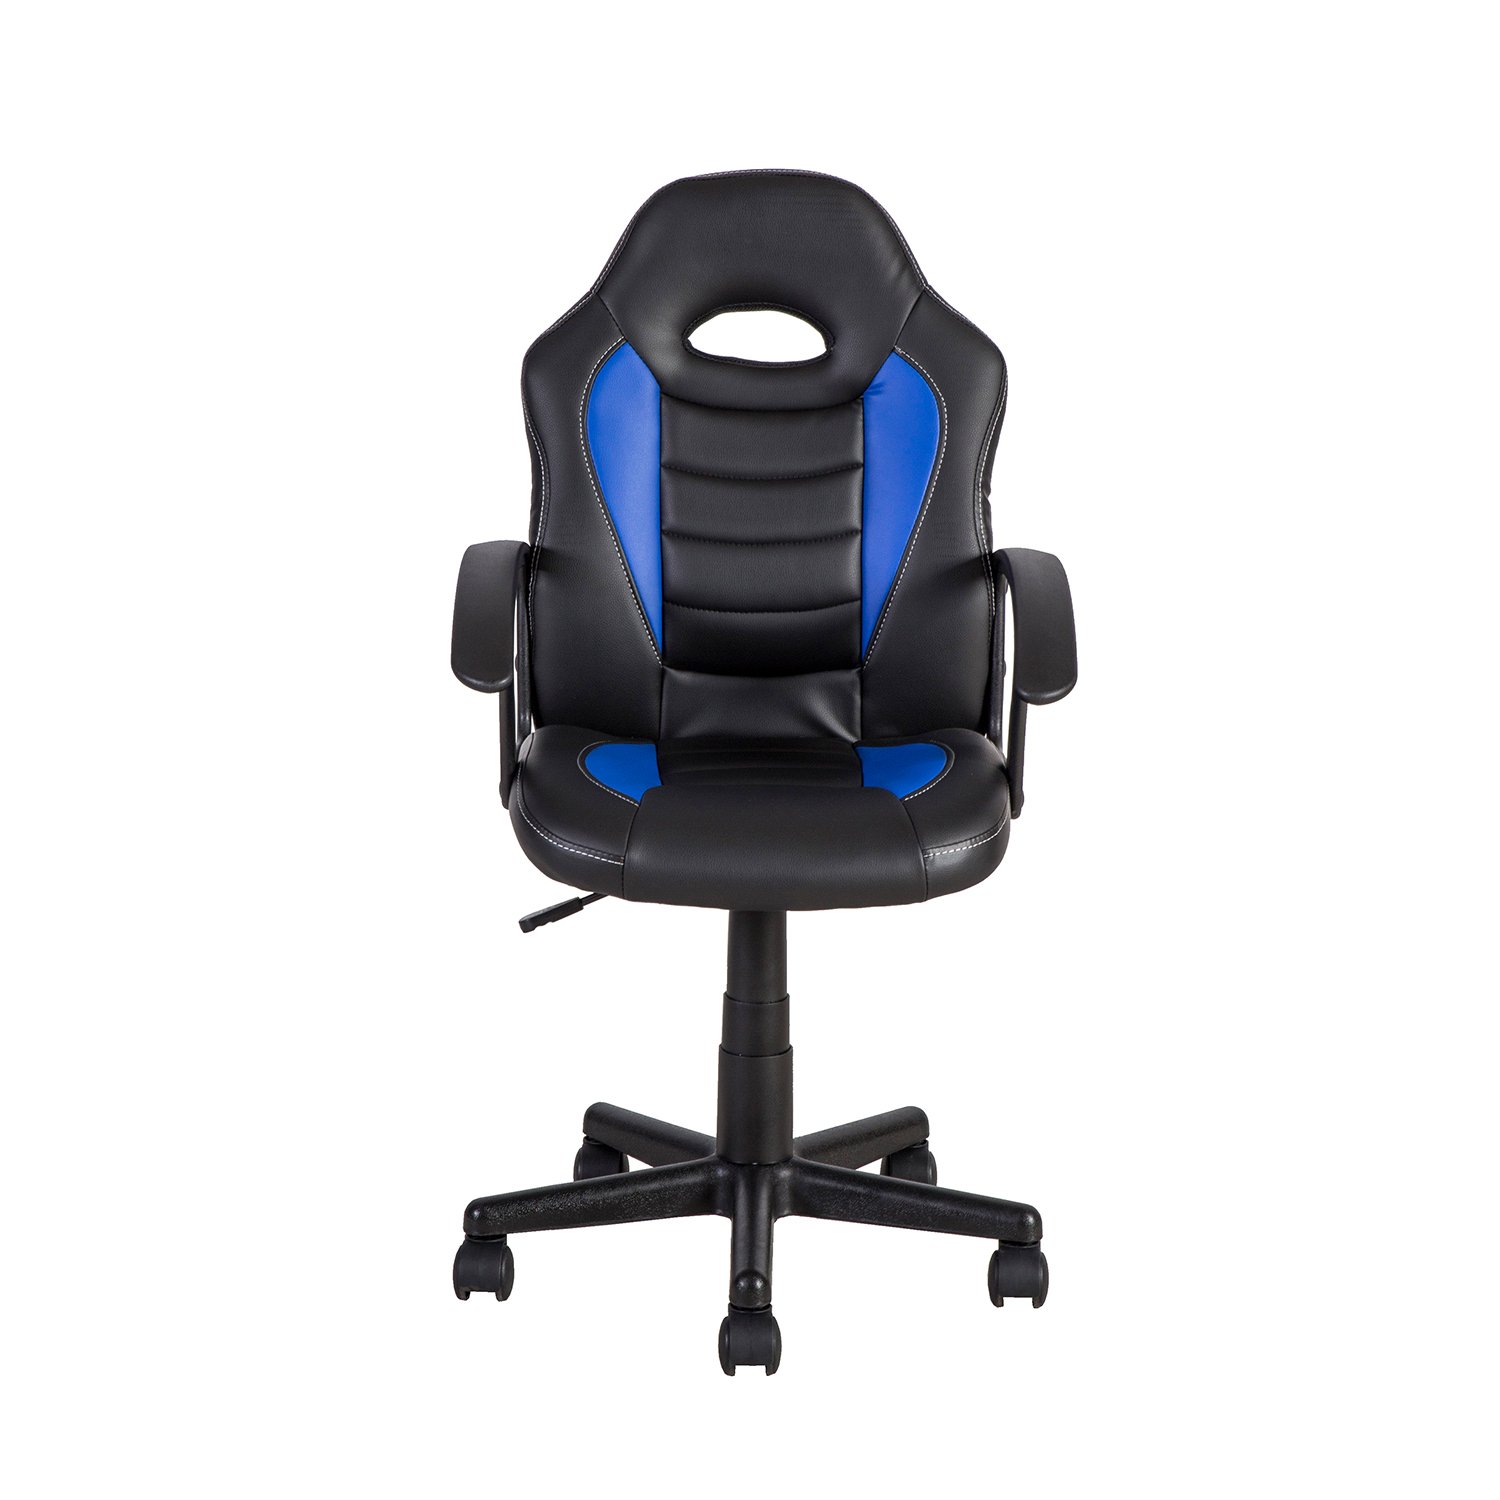 Biuro kėdė FORMULA-1 55x56xH88,5-99,5cm, juoda